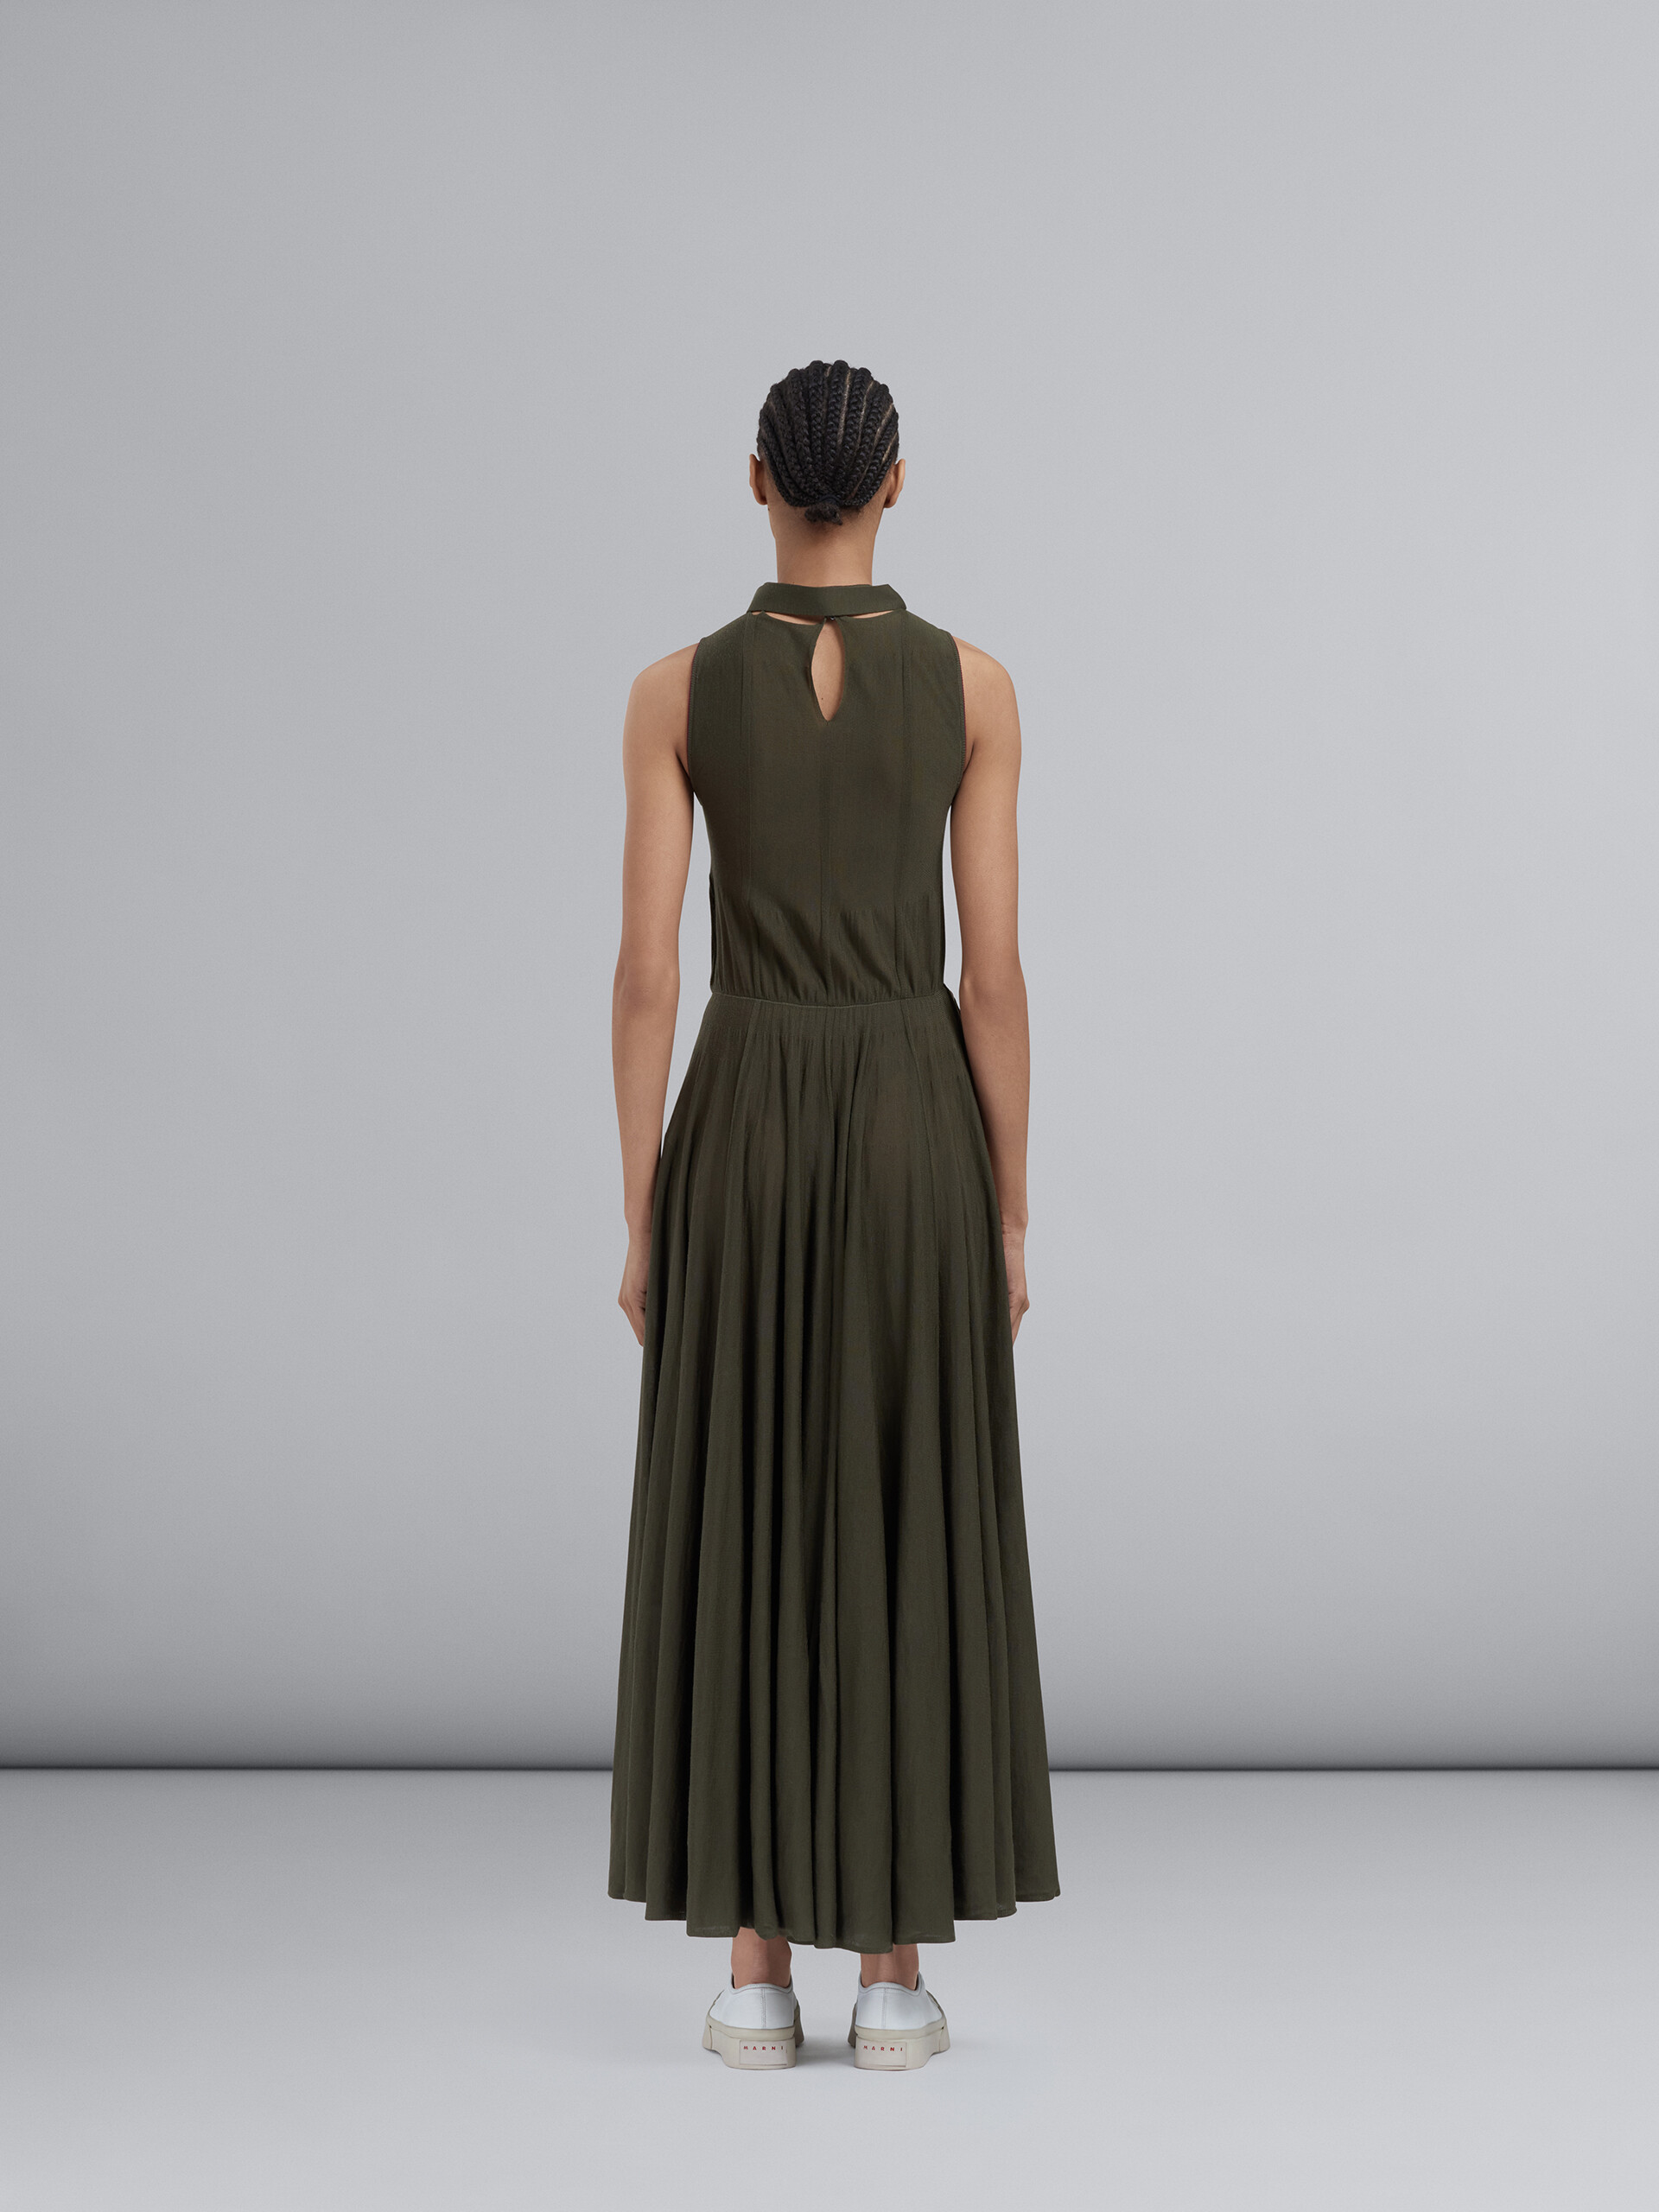 Chic light wool dress - Dresses - Image 3